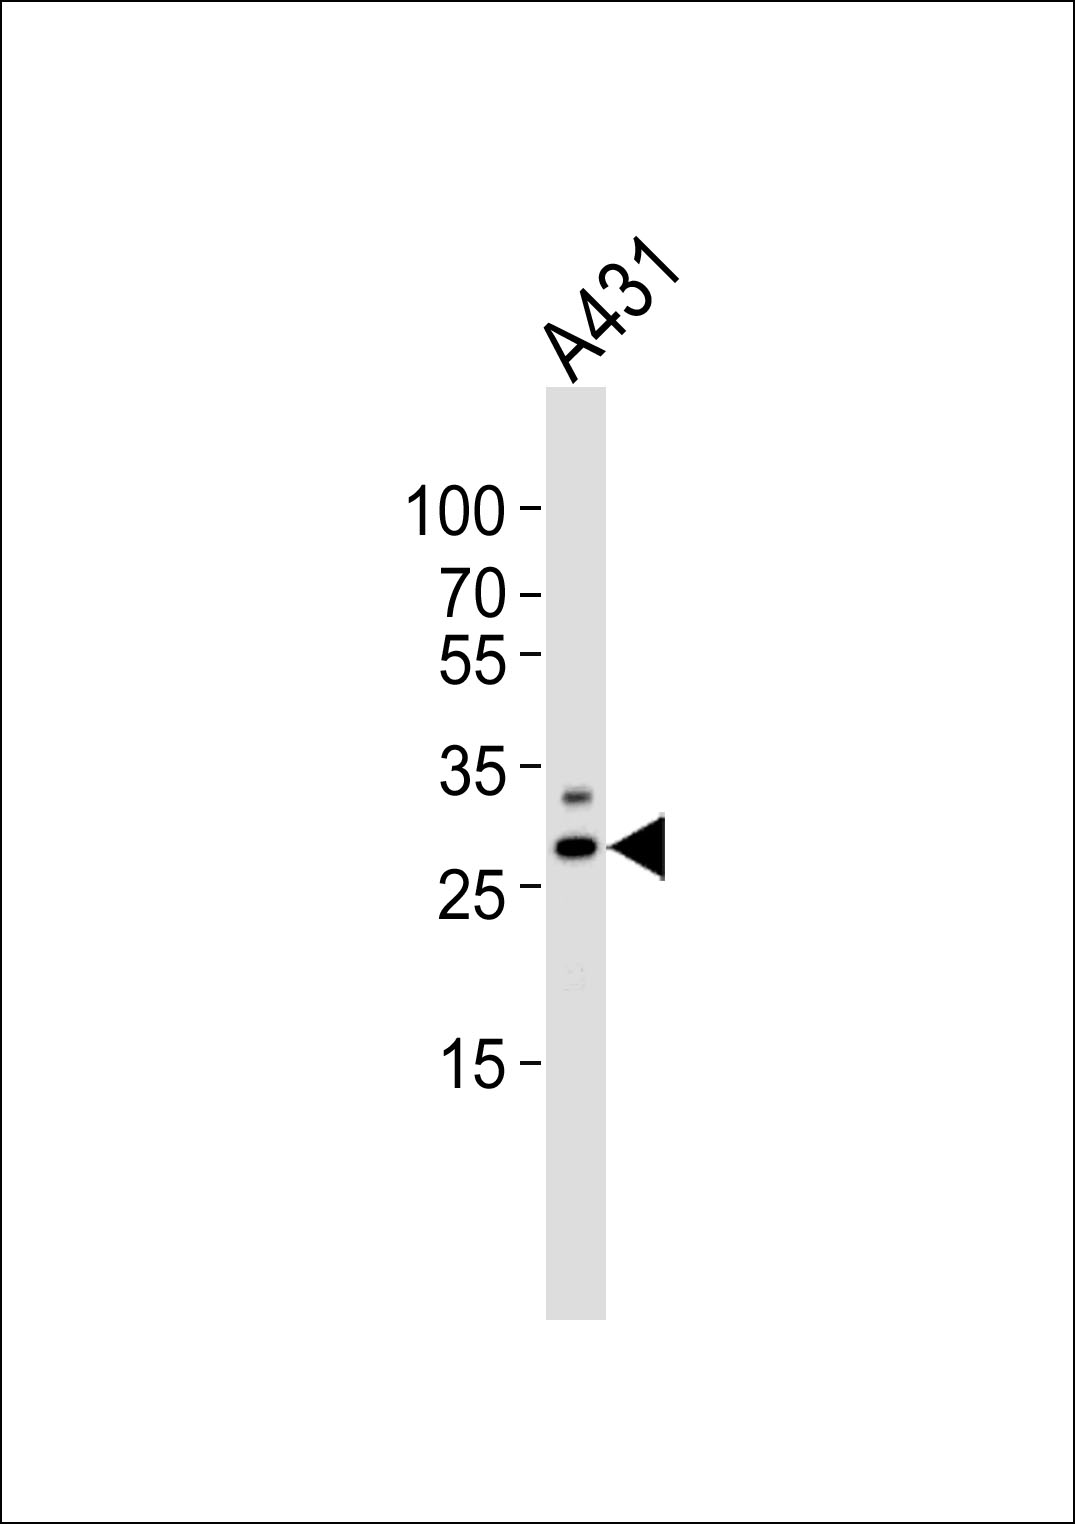 WB - PHB Antibody (N-term) AP20757a